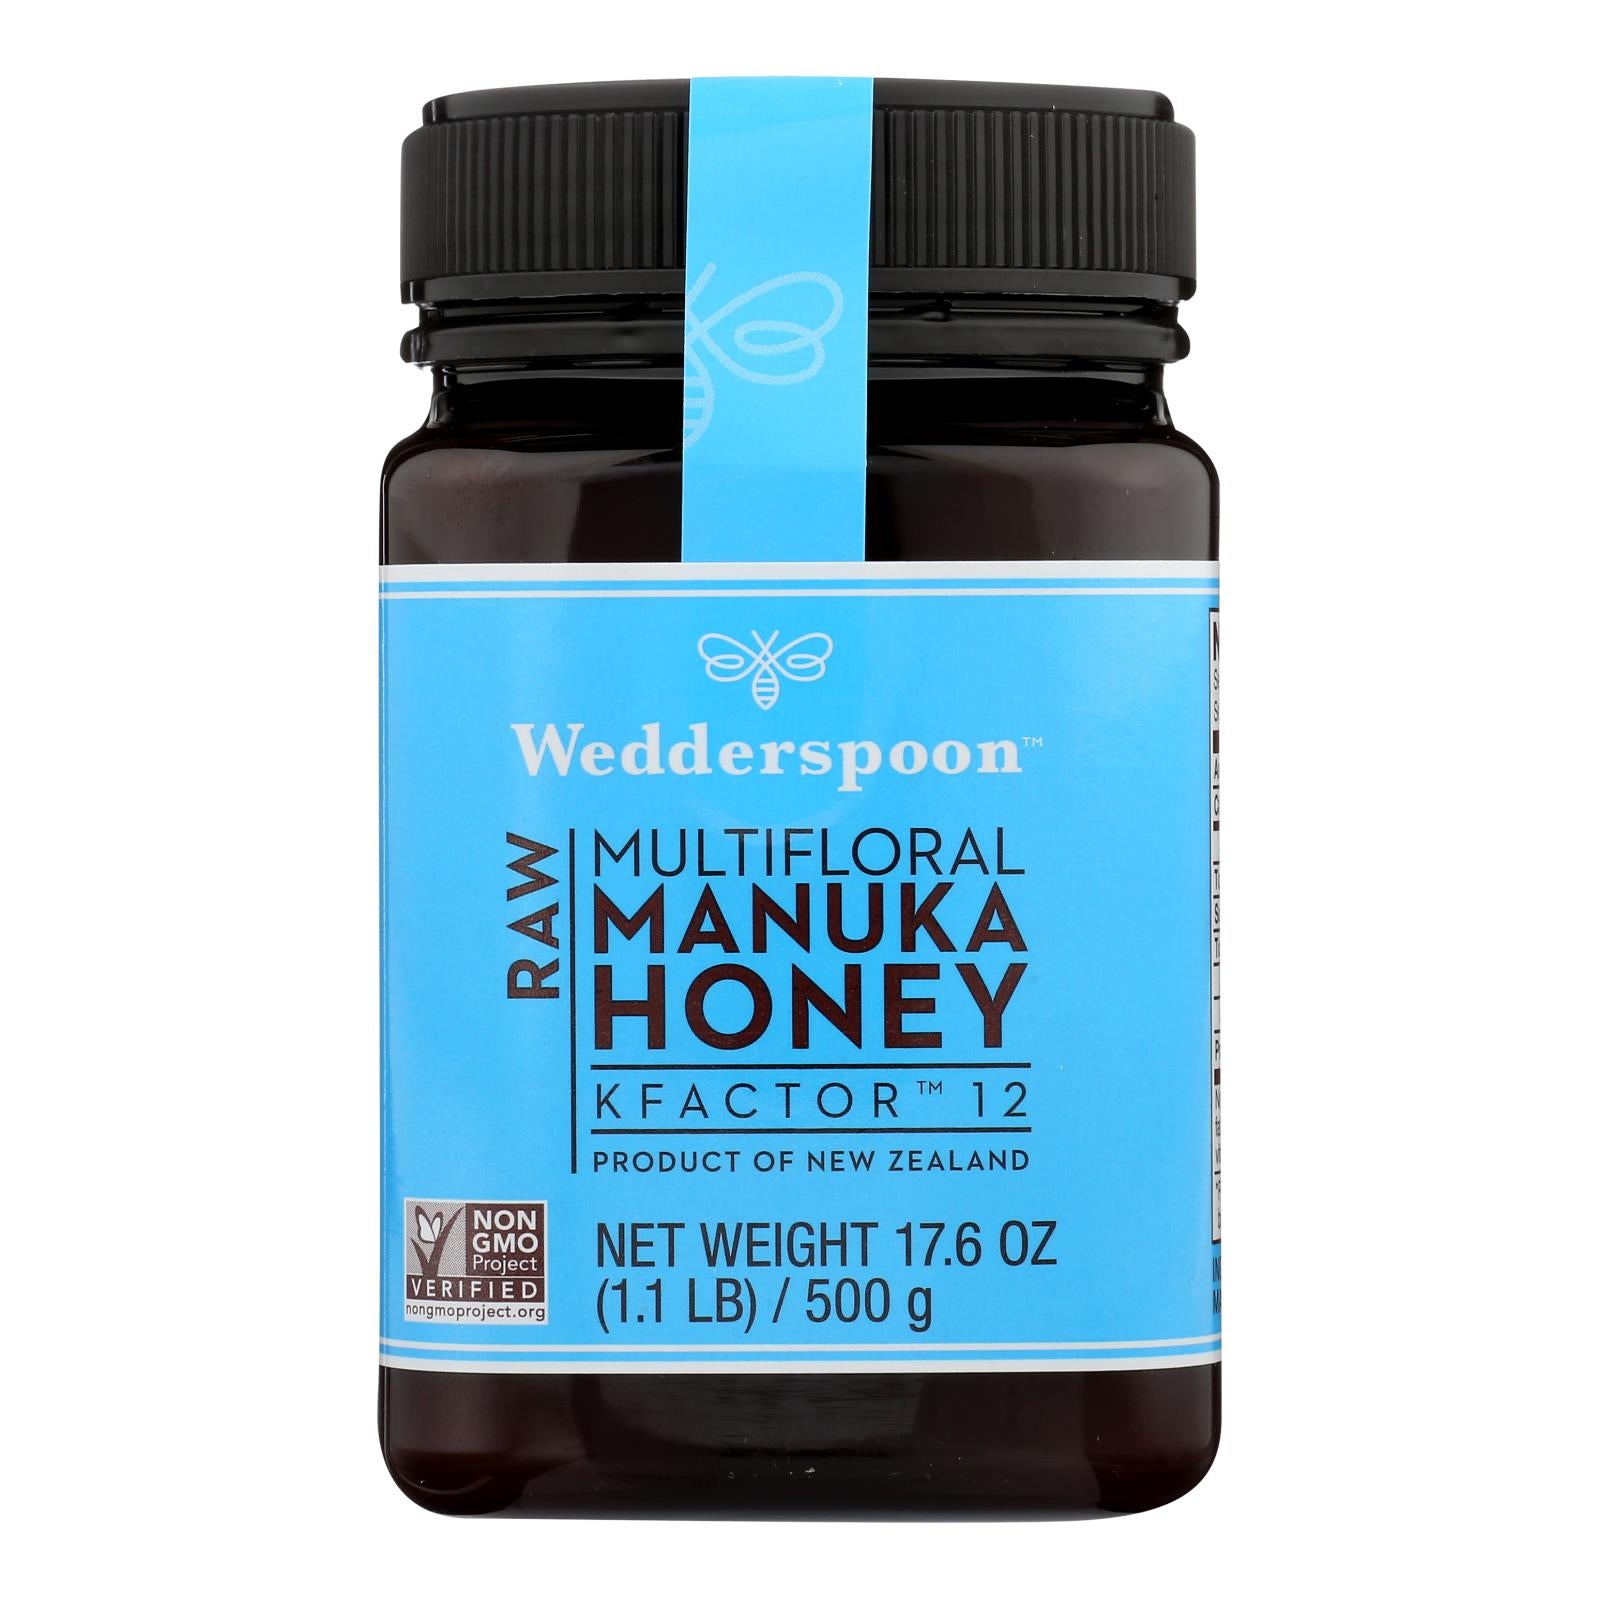 Wedderspoon Raw Manuka Honey Kfactor 12  - Case Of 6 - 17.6 Oz